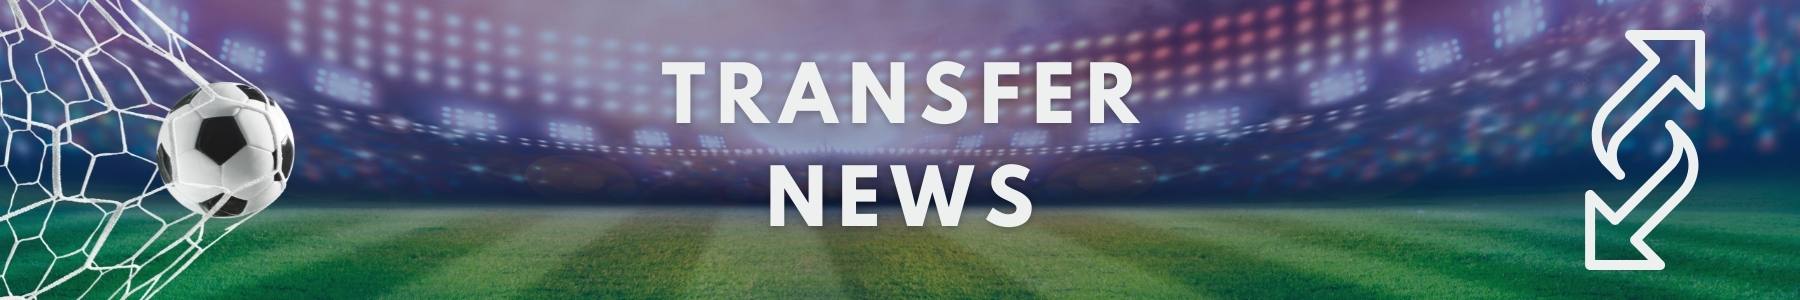 Transfer News - Football